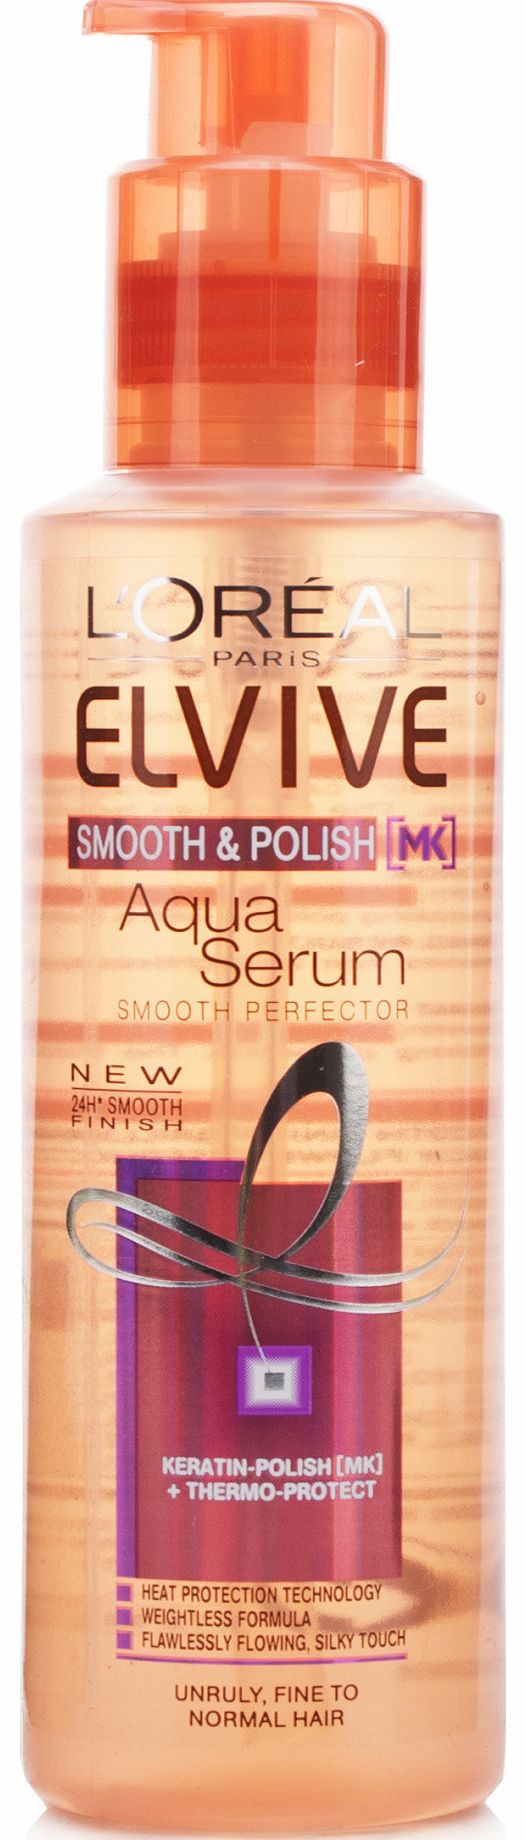 L'Oreal Elvive Smooth & Polish Aqua Serum